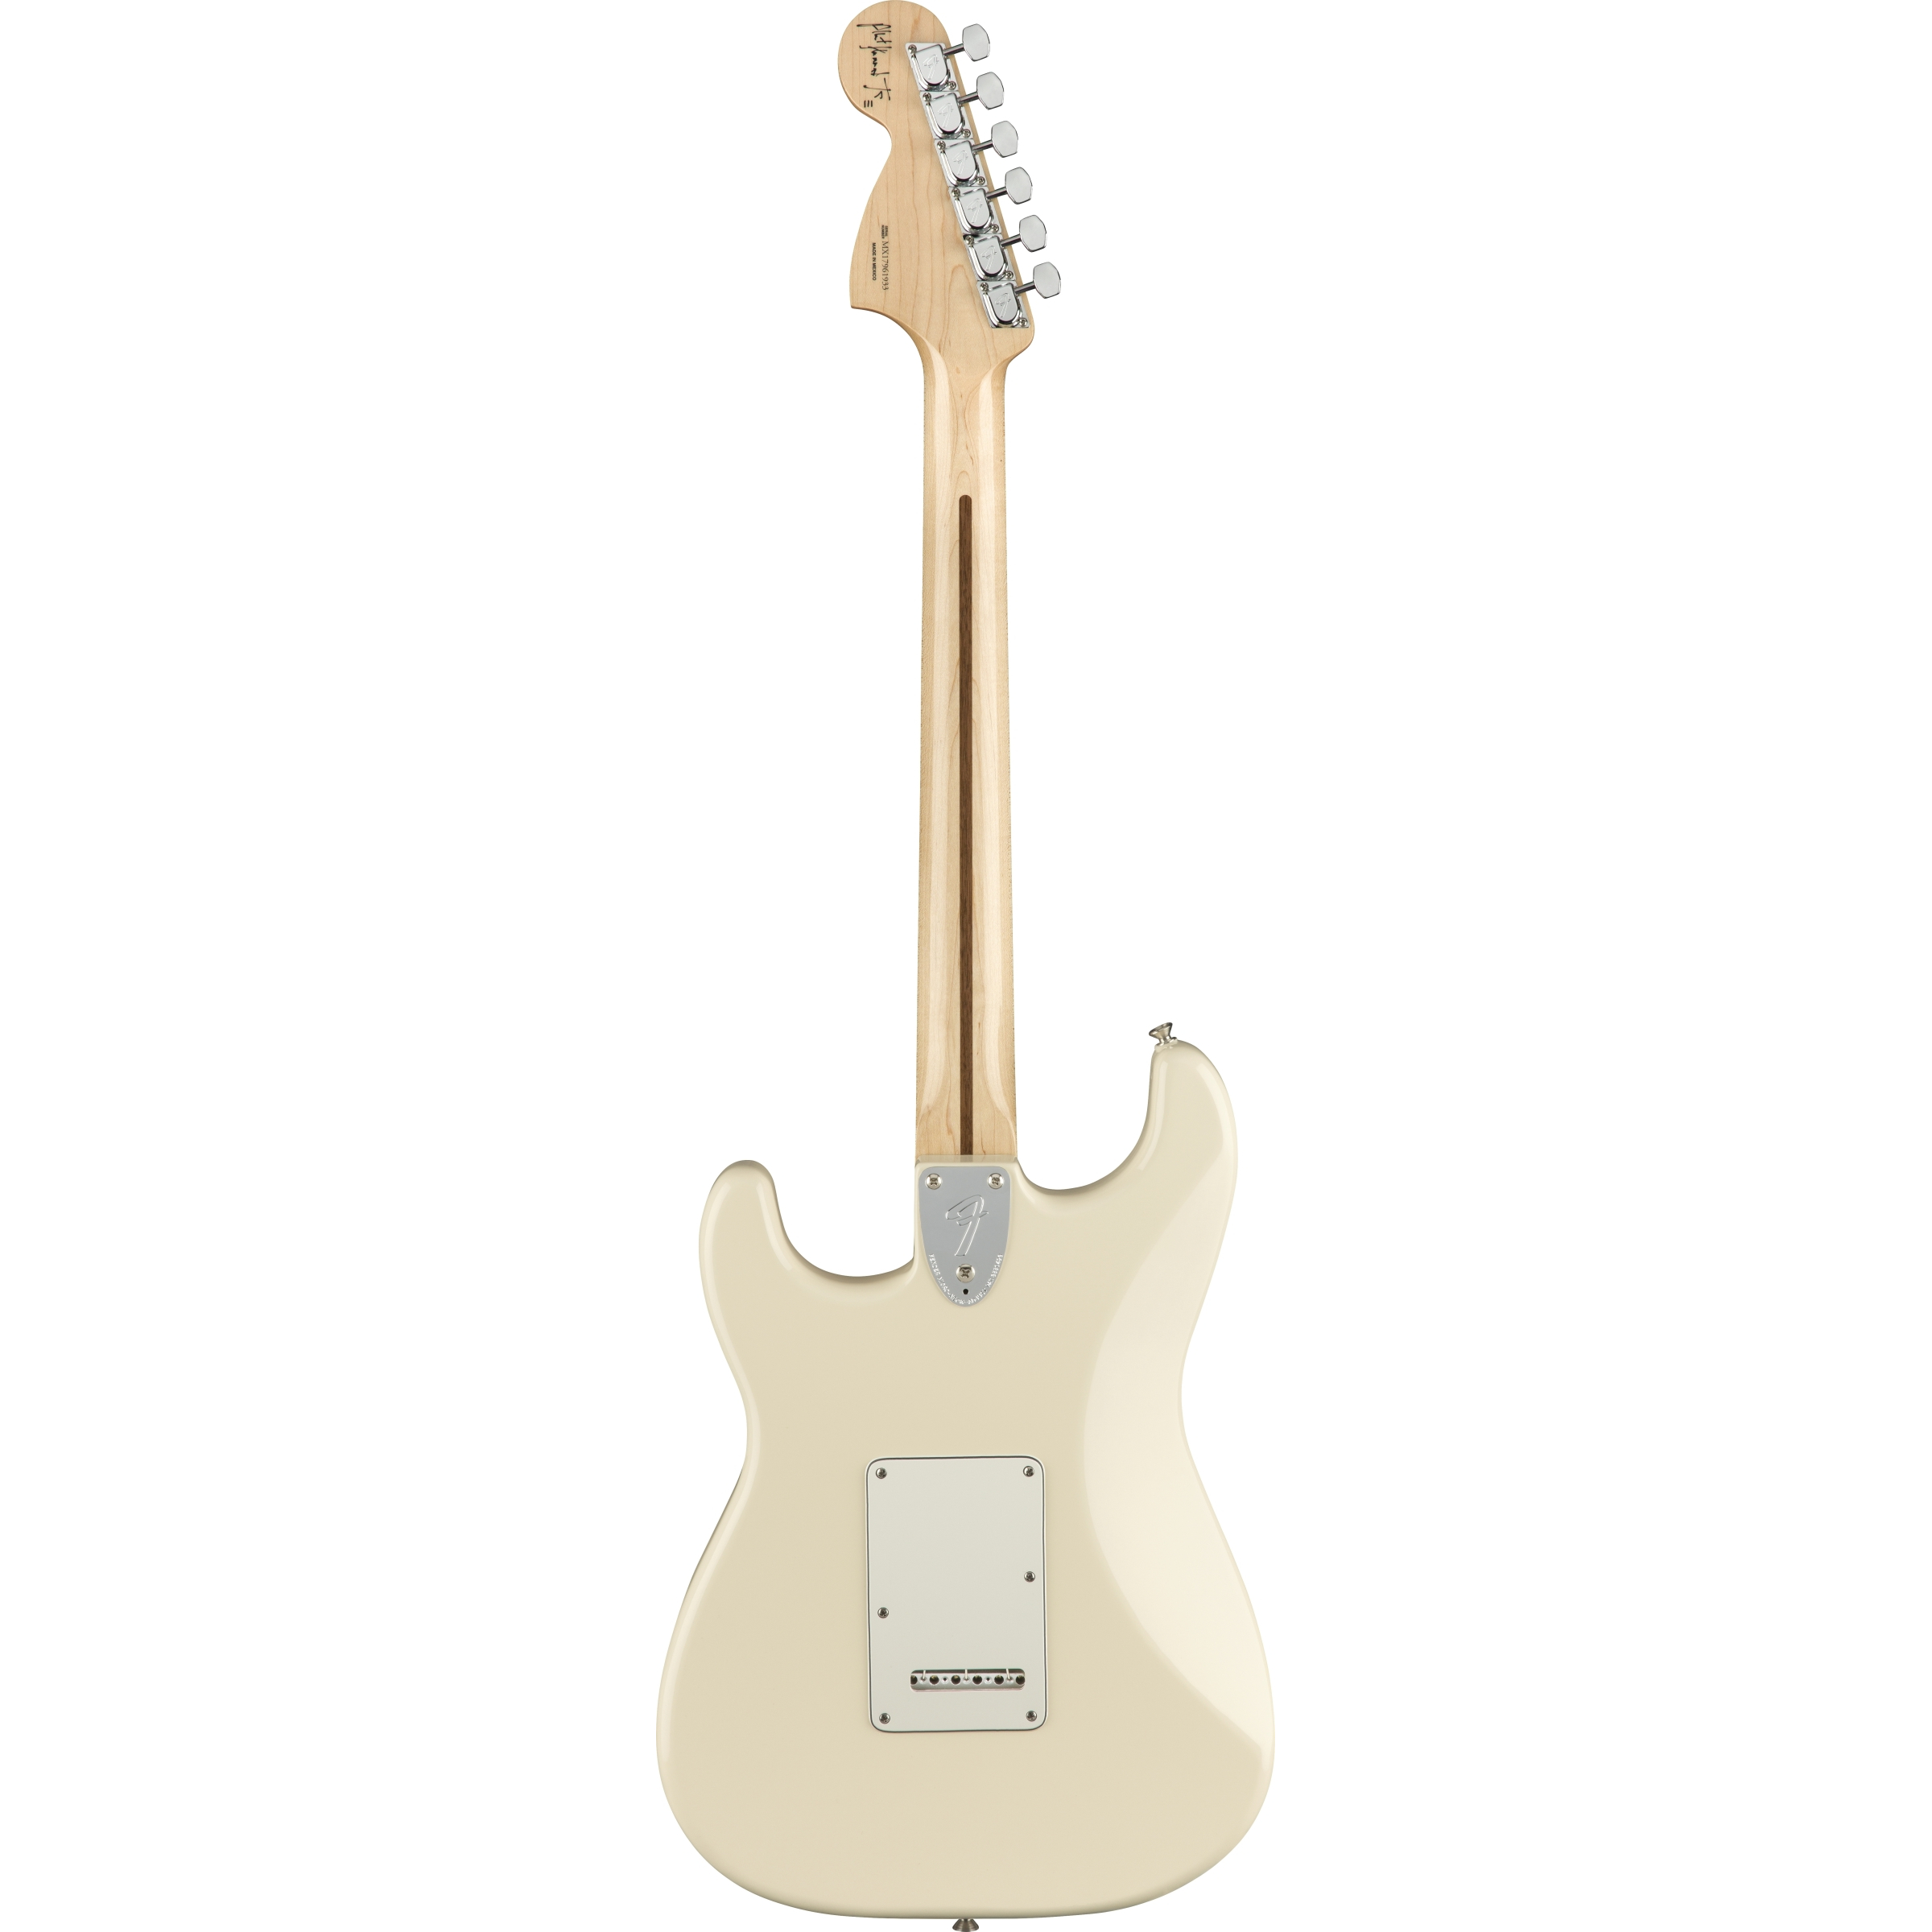 Fender Albert Hammond Jr. Signature Stratocaster®, Rosewood Fingerboard, Olympic White